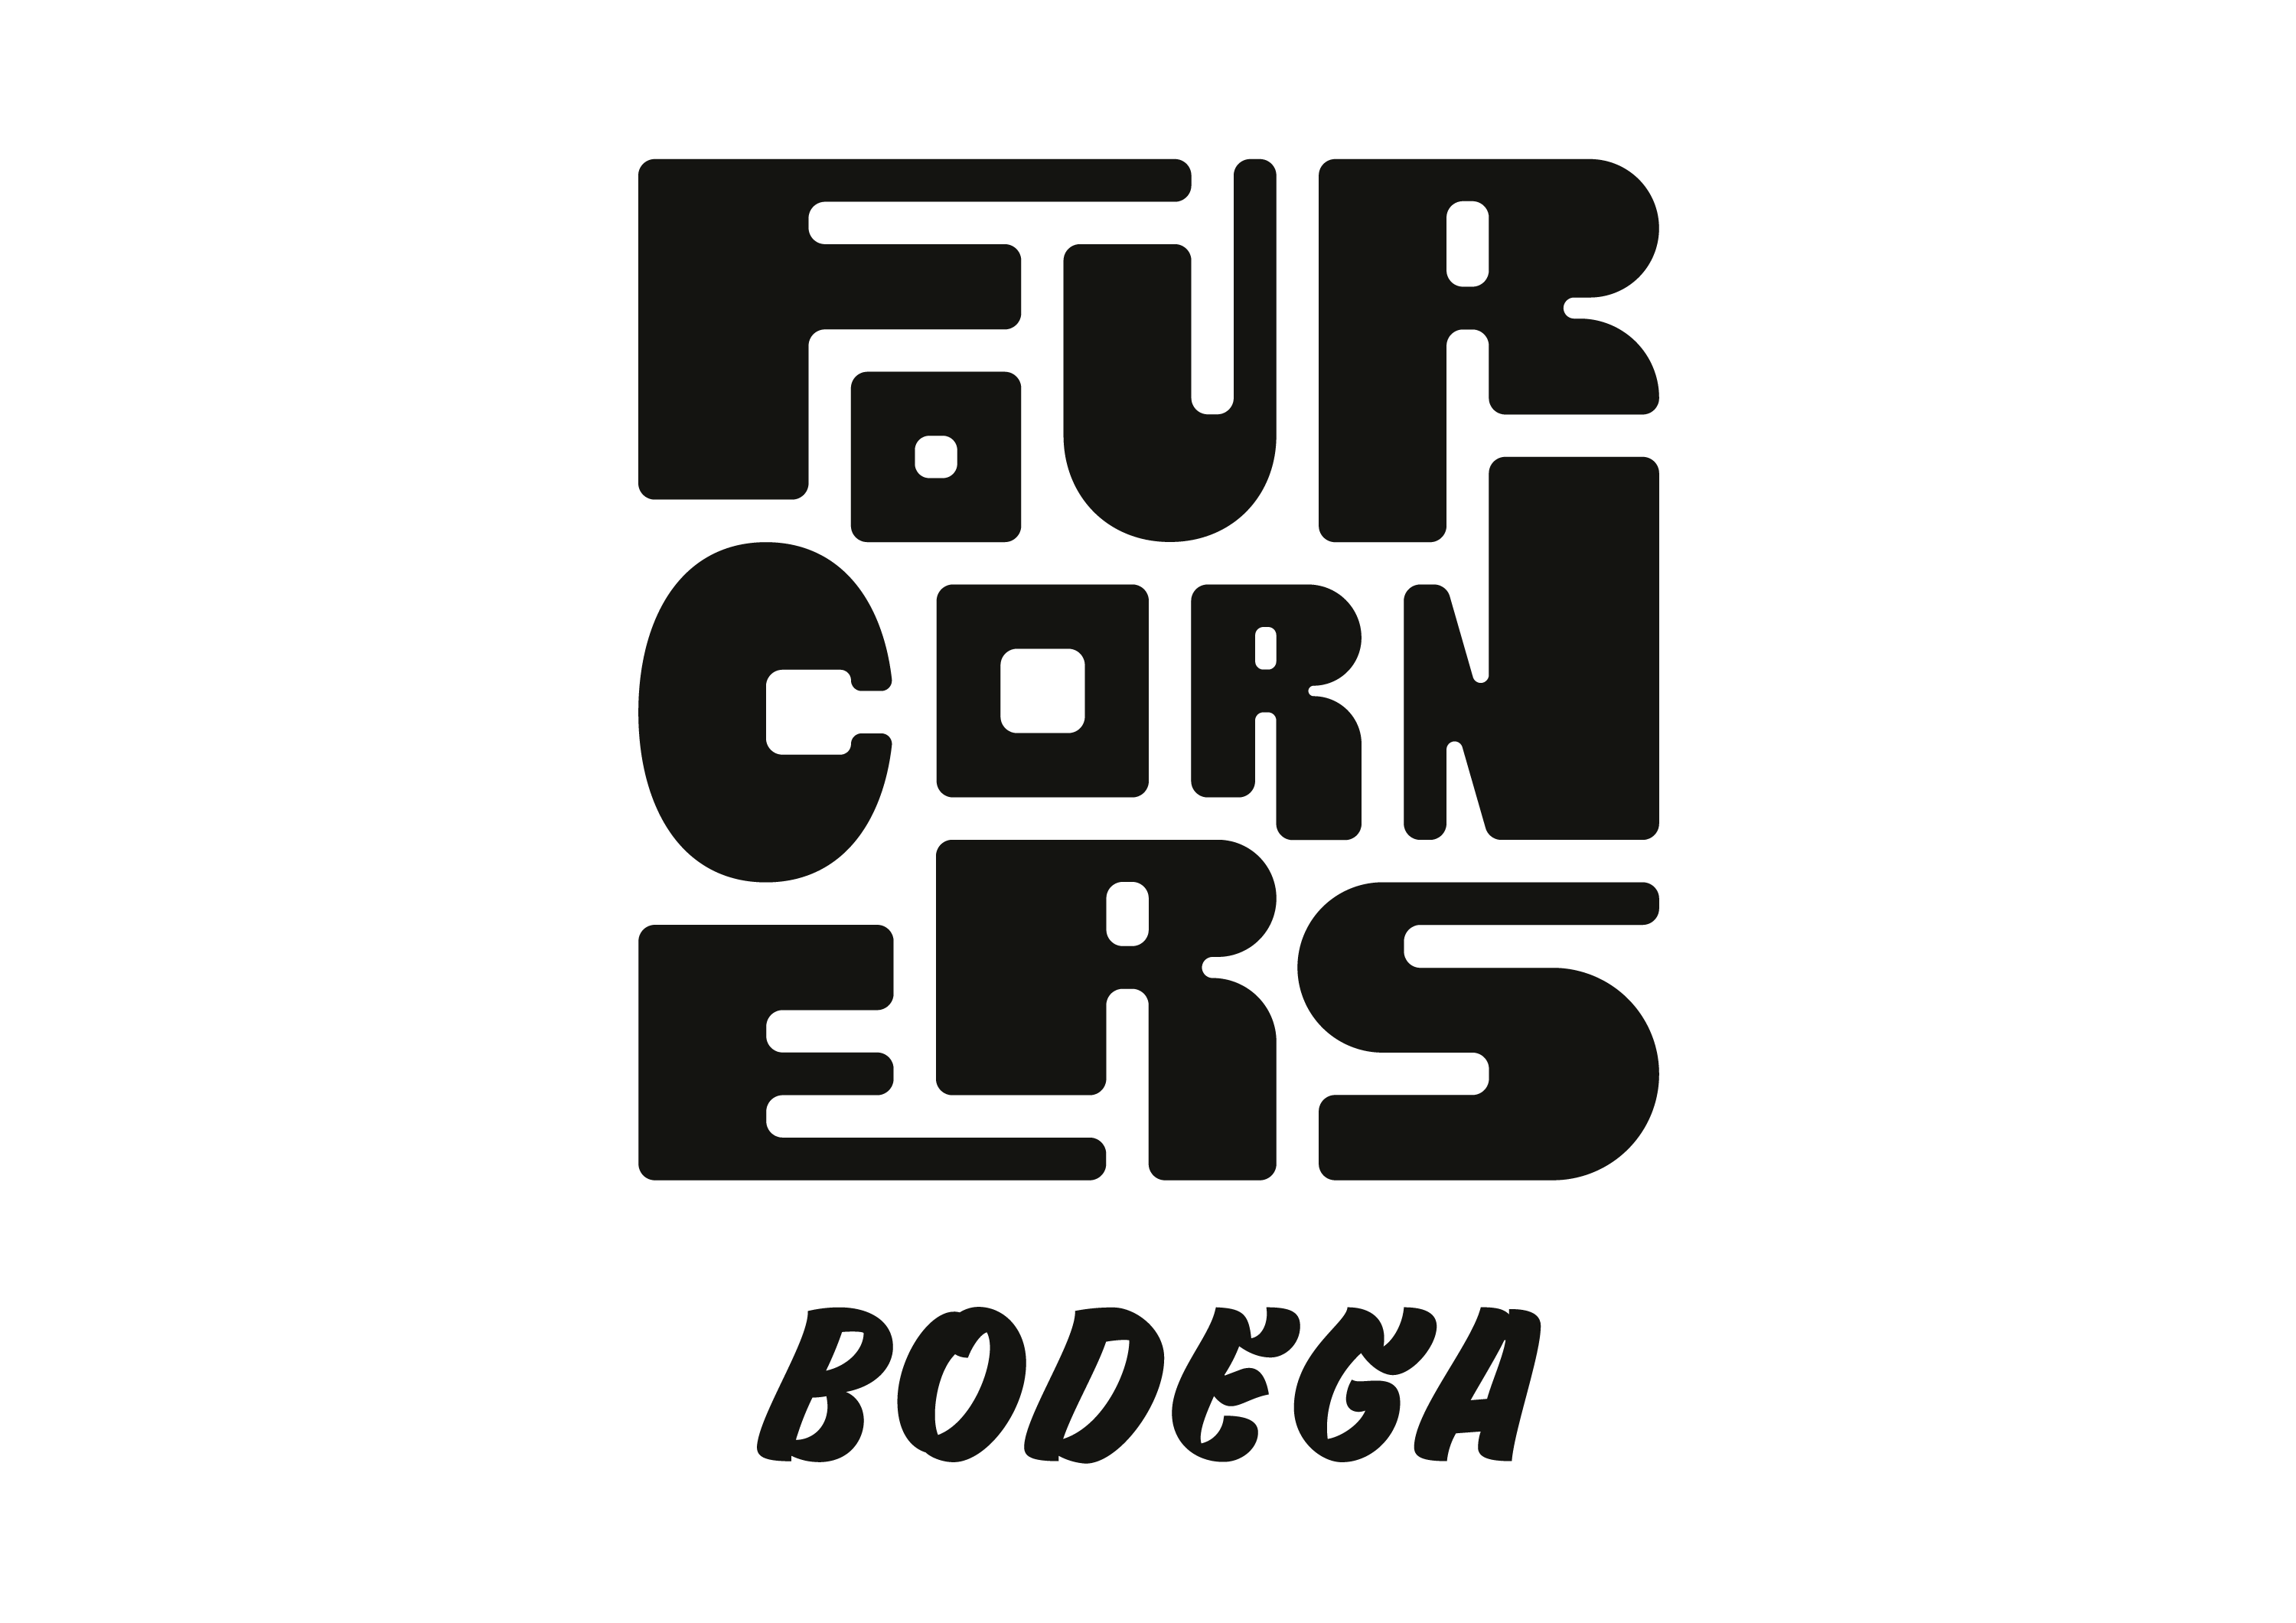 Four Corners Bodega